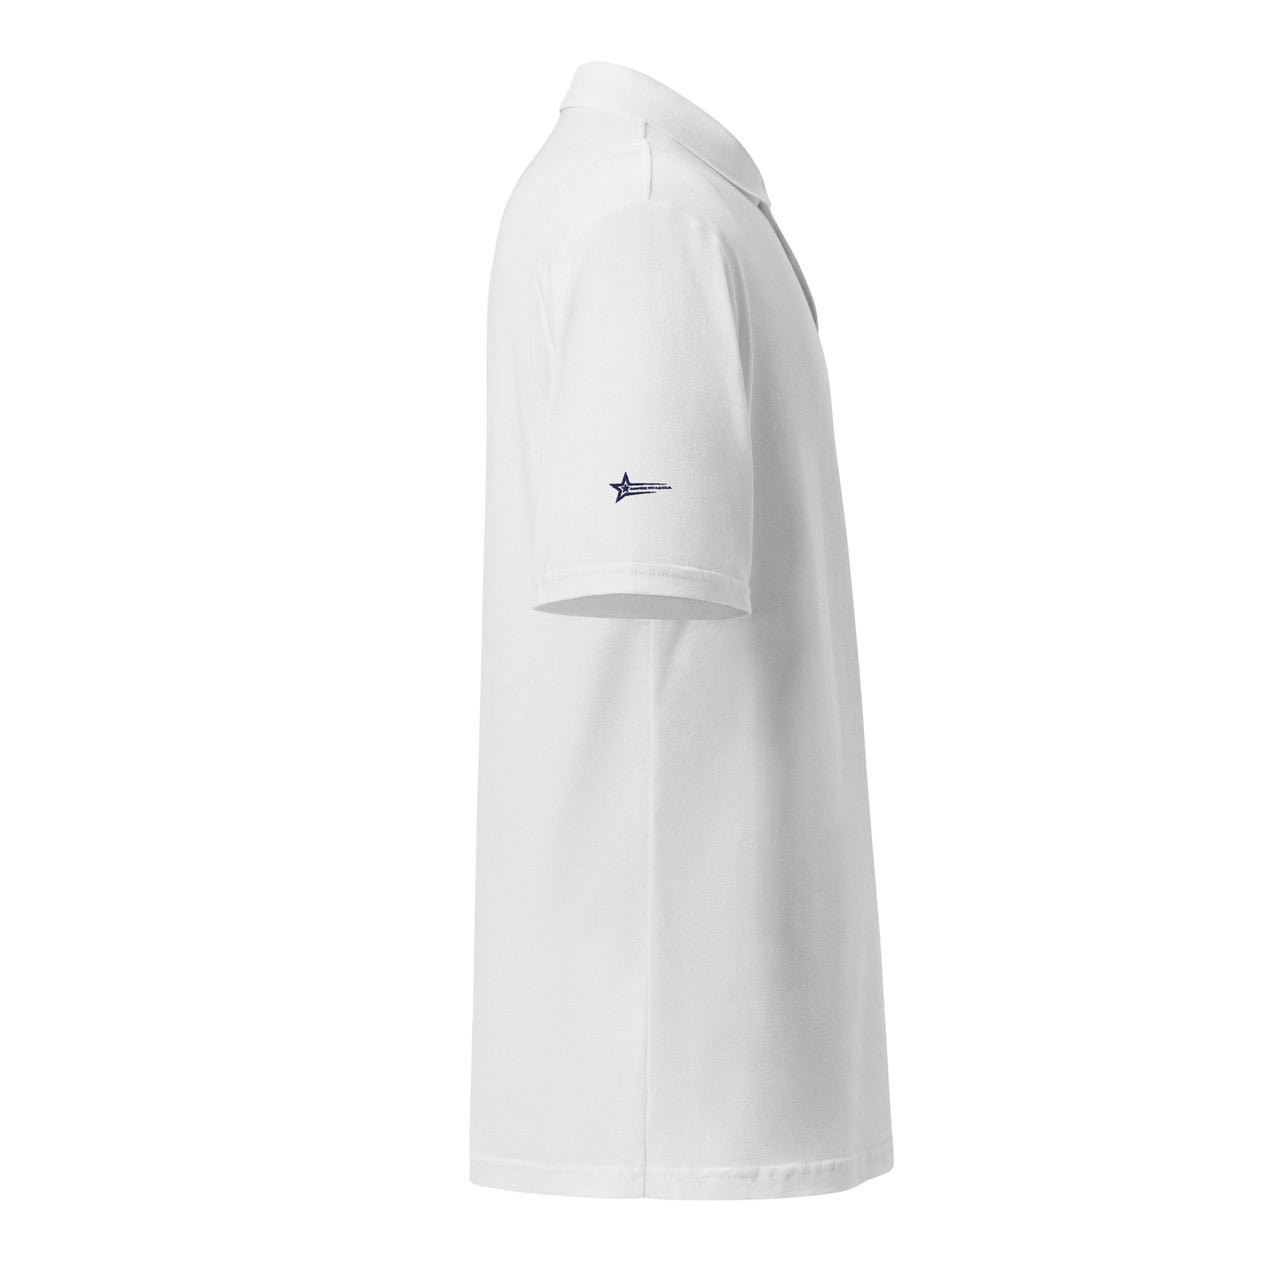 Unisex pique polo shirt - in white. (School Uniform Compliant)